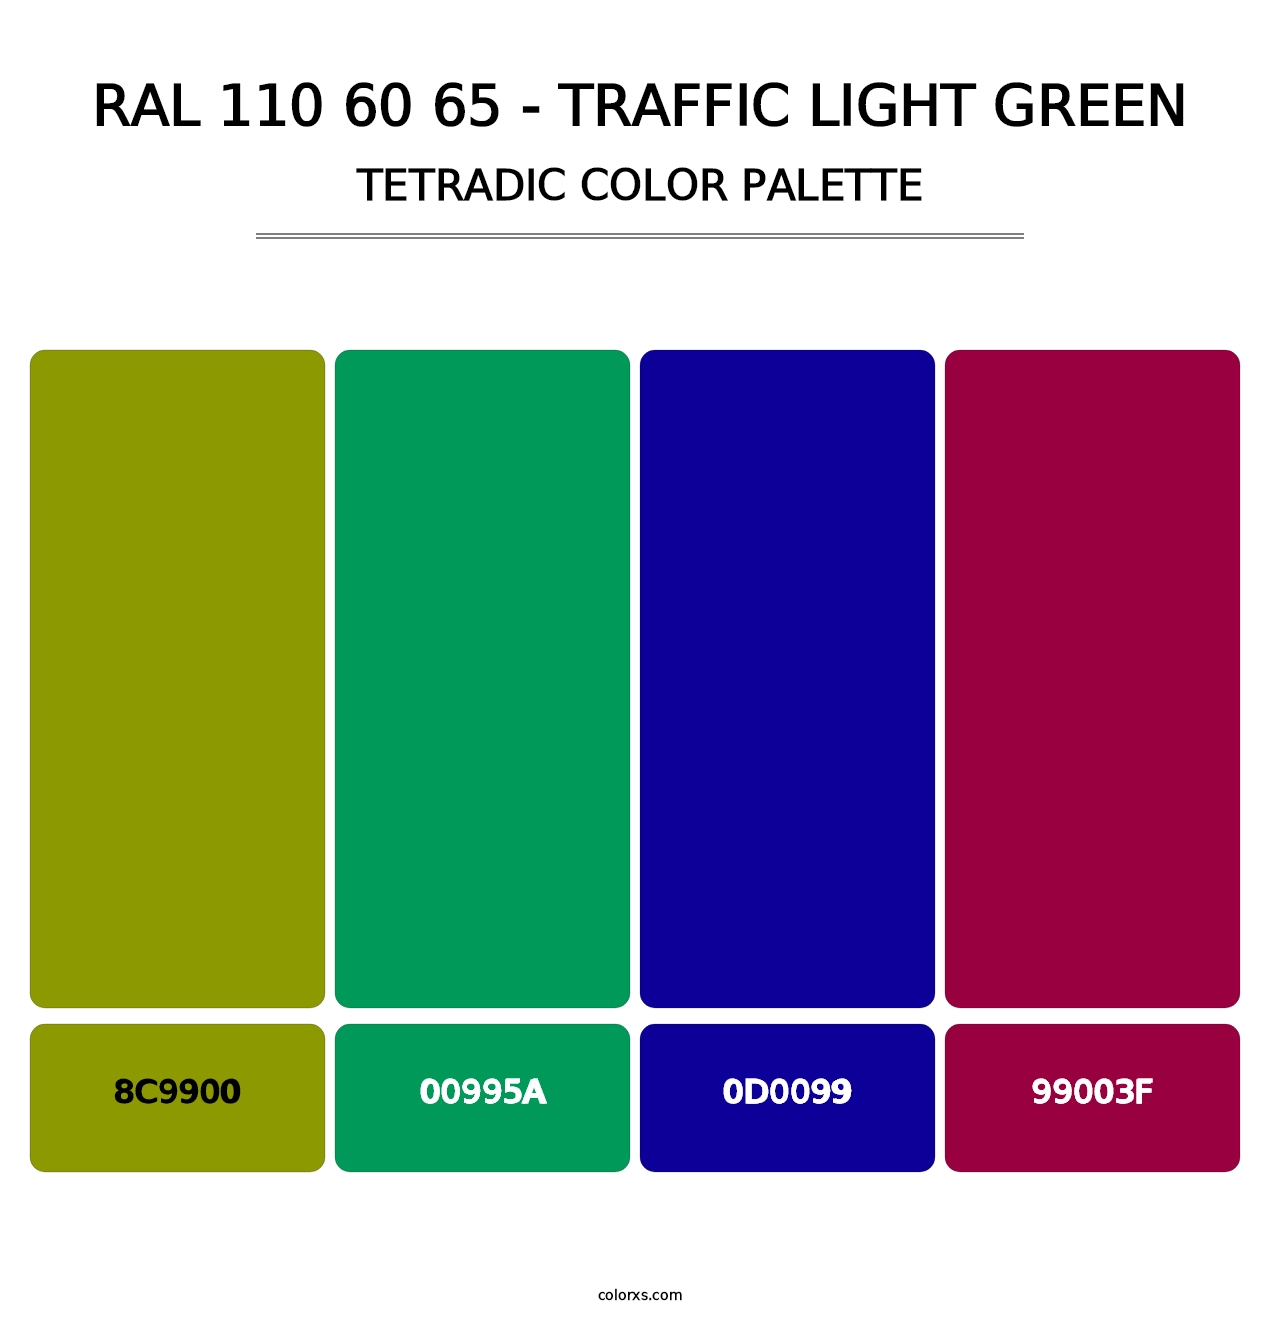 RAL 110 60 65 - Traffic Light Green - Tetradic Color Palette